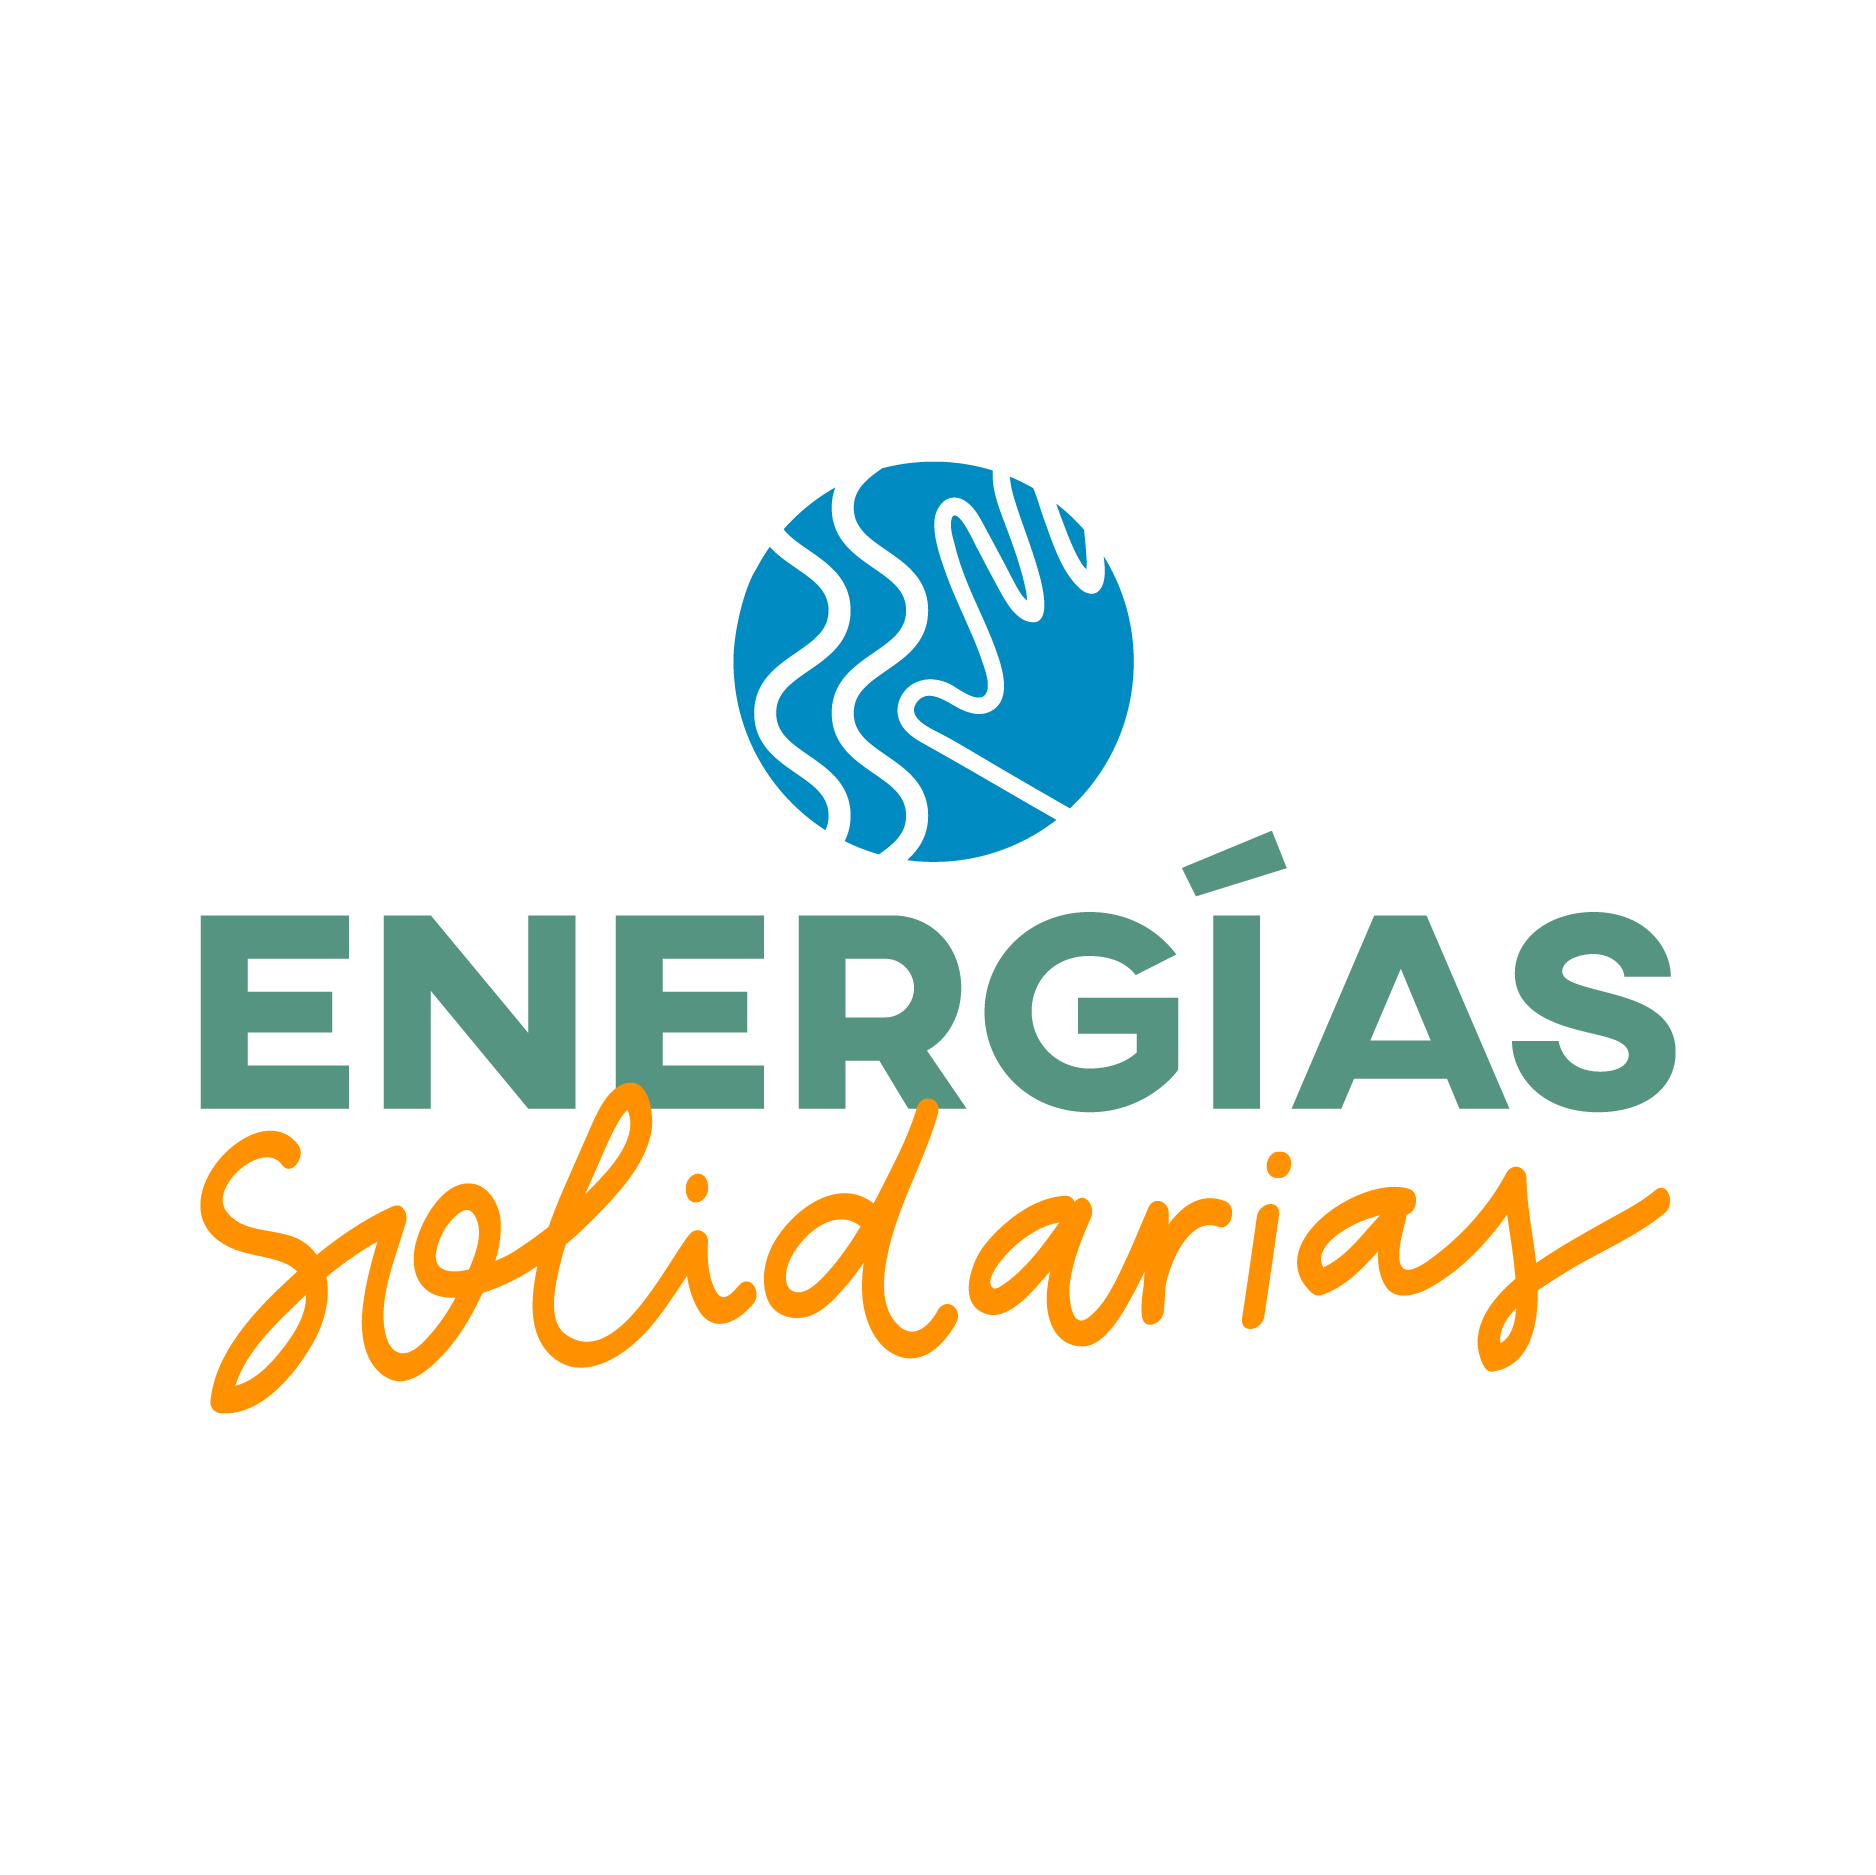 Energias Solidarias